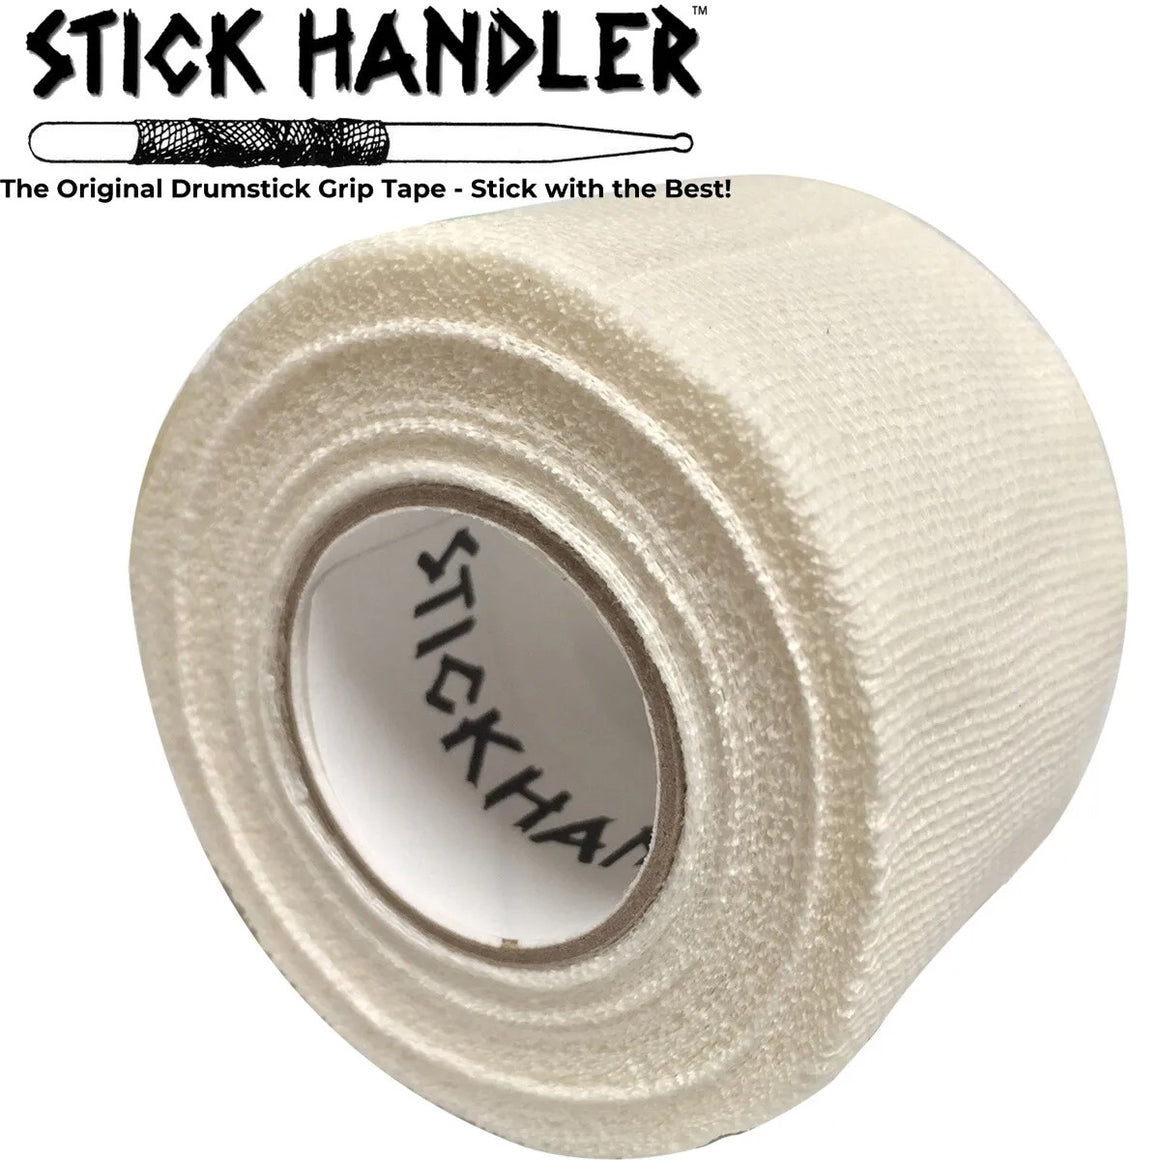 Stick Handler SHW White Drumstick Grip Tape